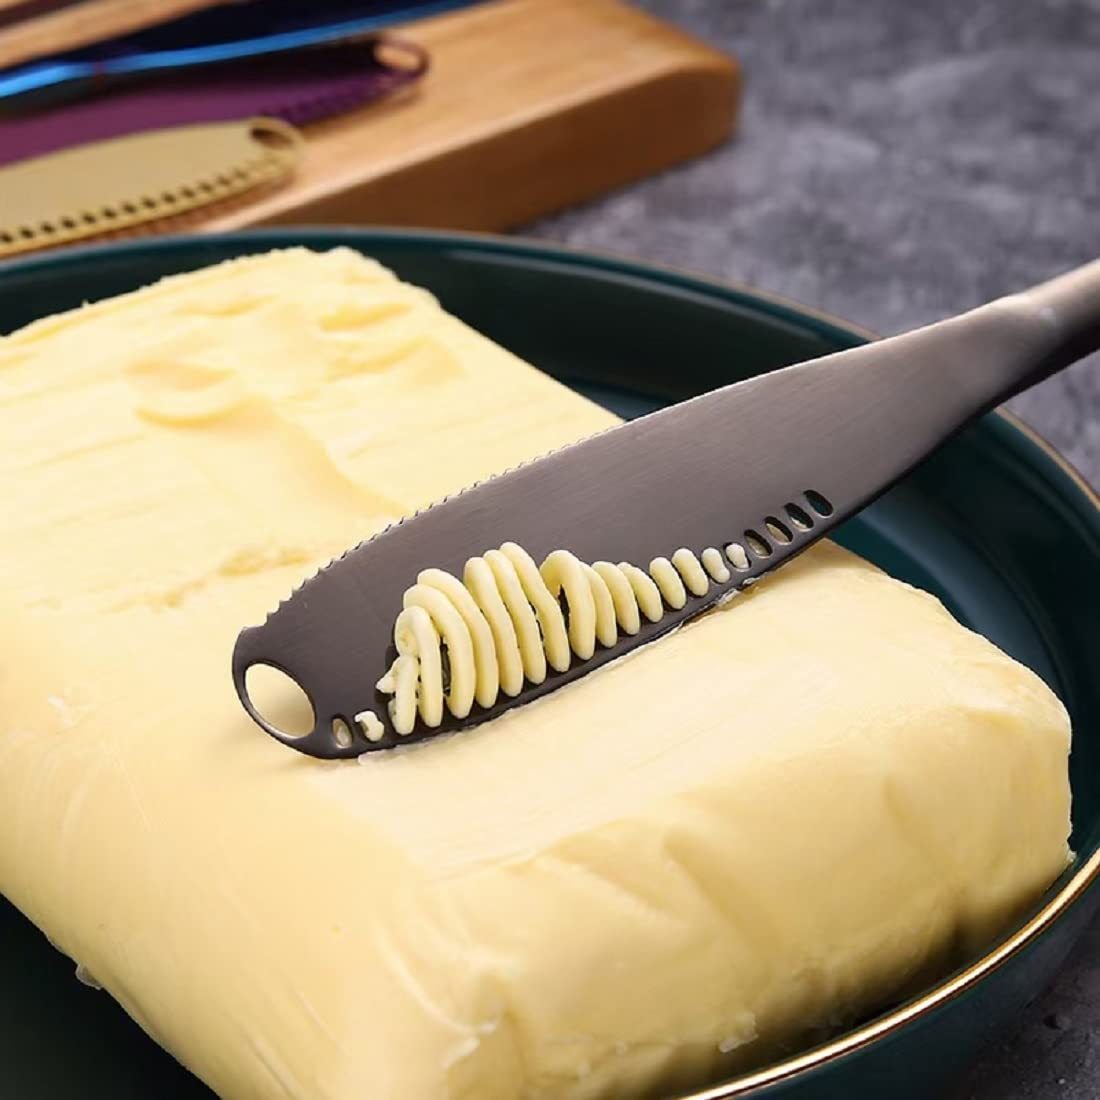 Stainless Steel Butter Spreader Knife with Handle - 3 in 1 Curler Slicer Knife - Kitchen Gadgets